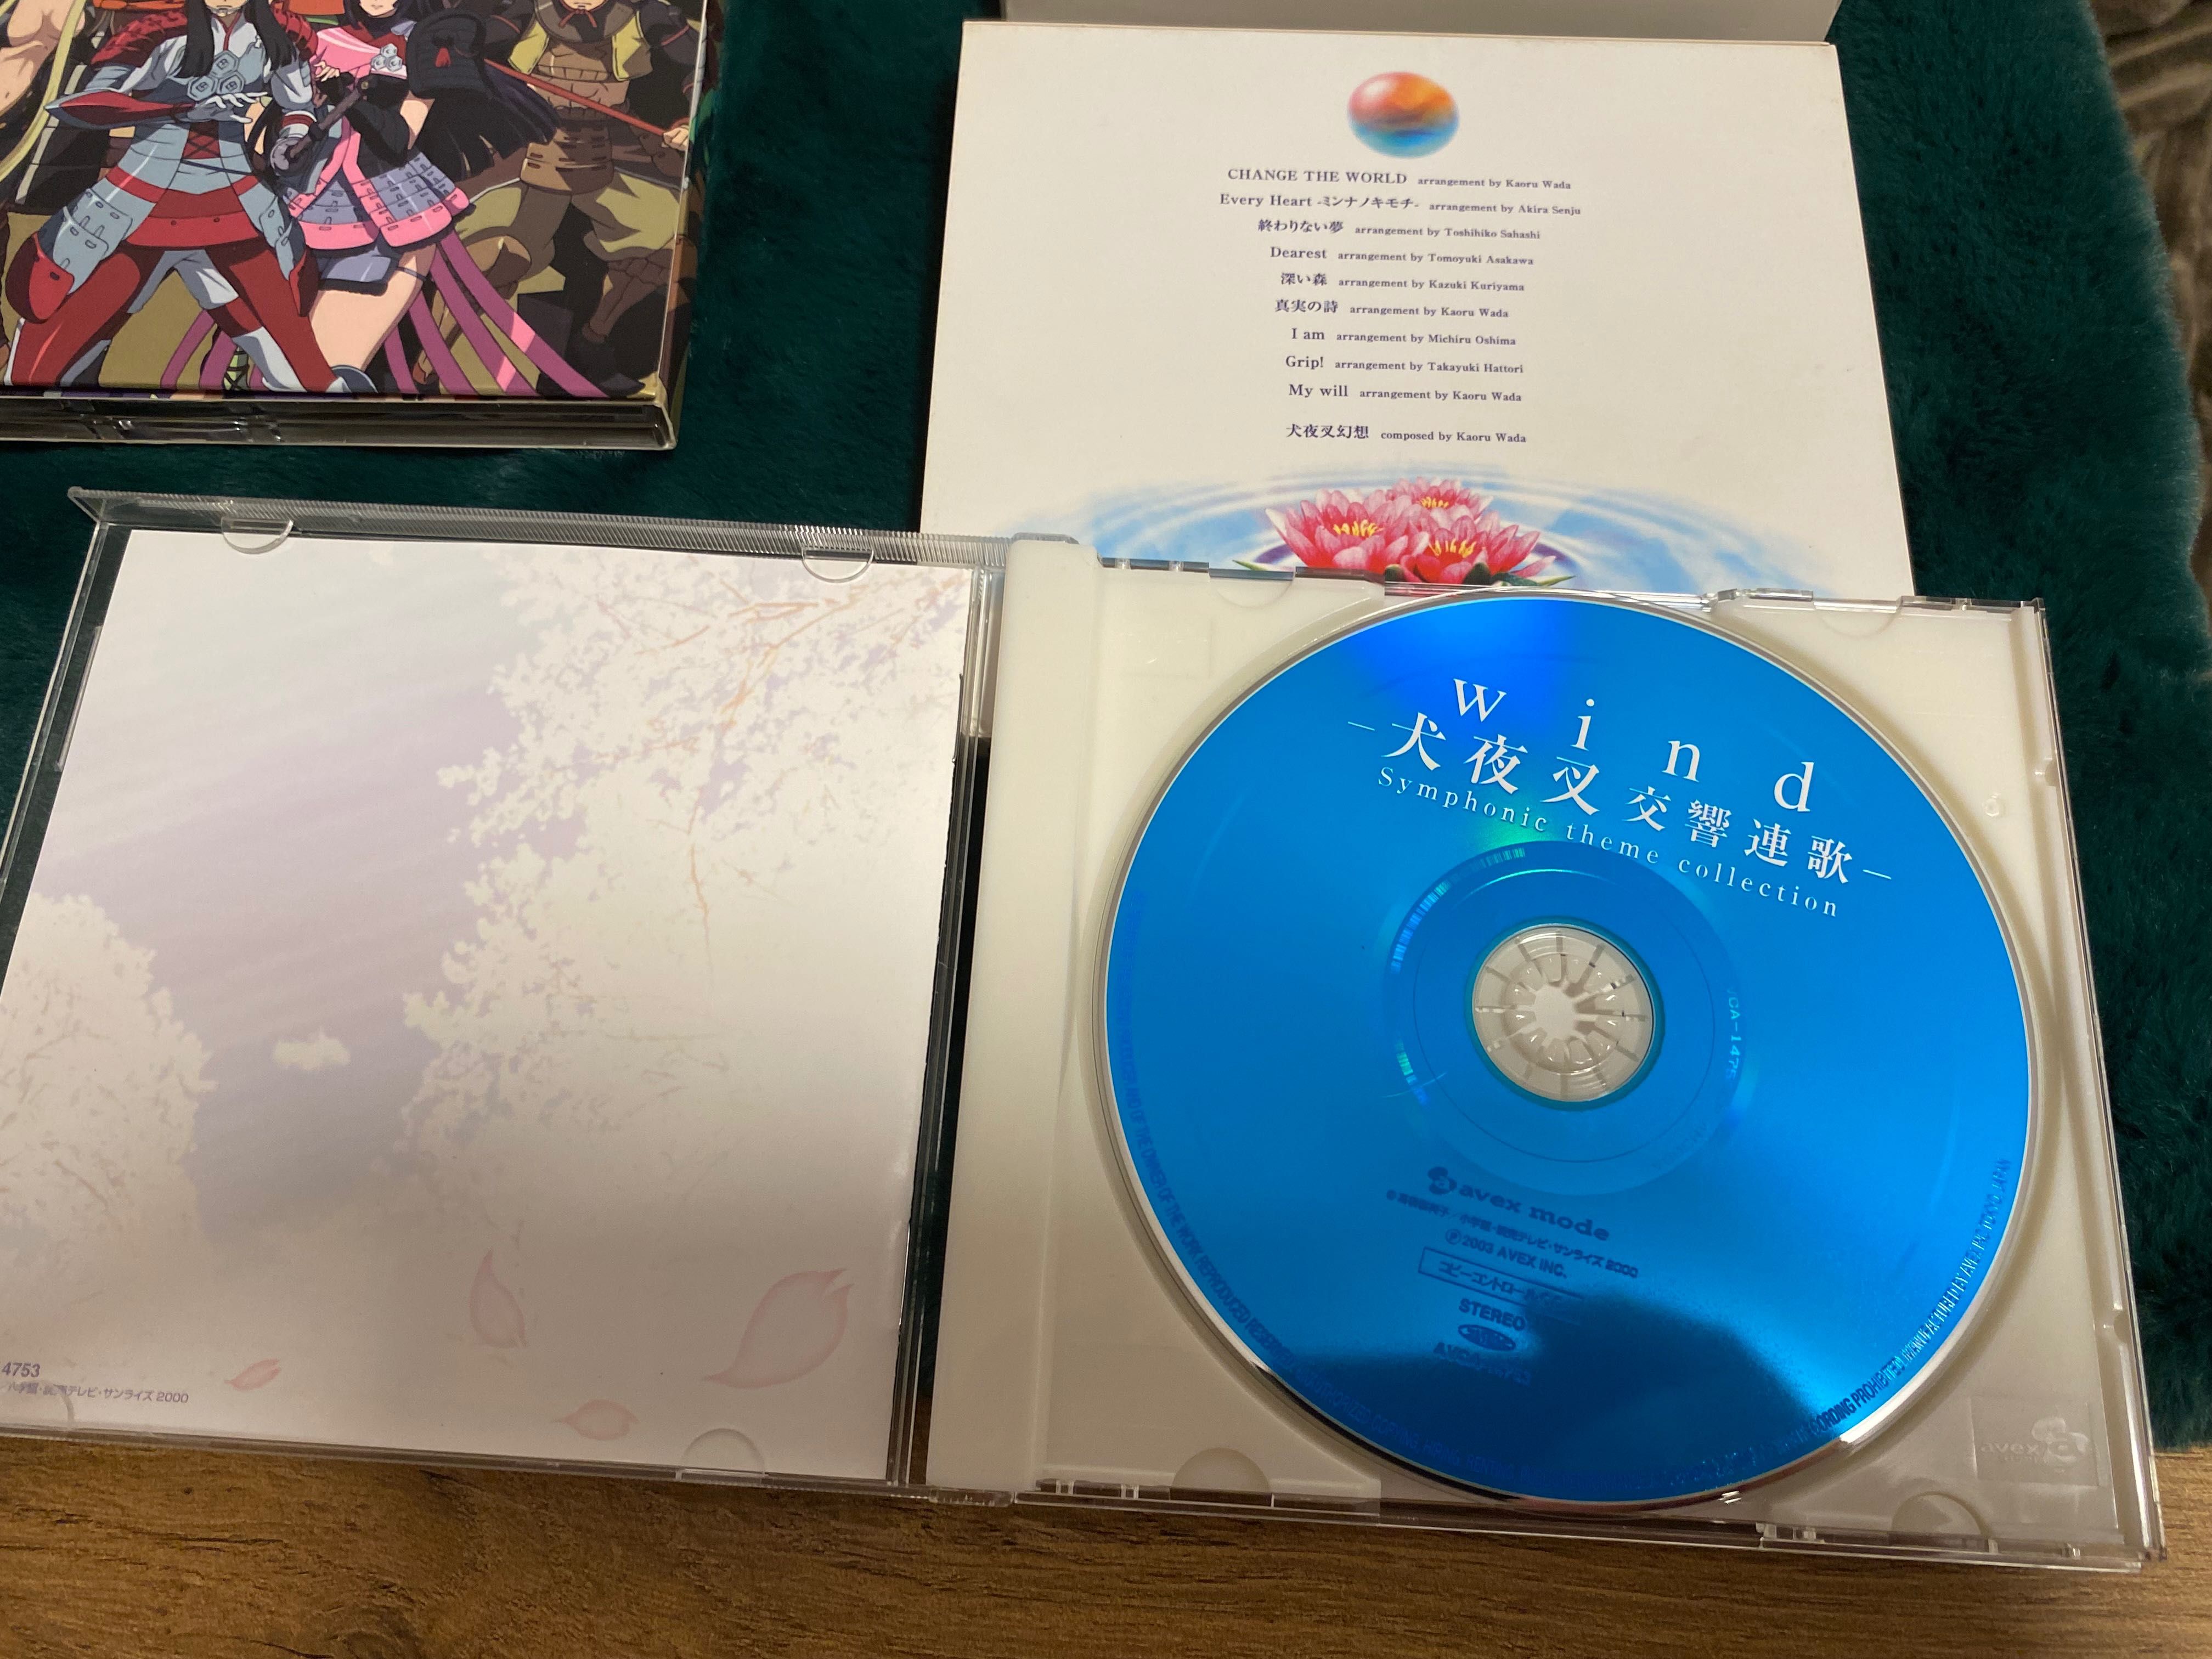 muzyka anime japonia Inuyasha Wind Symphony cd bdb komplet z obi